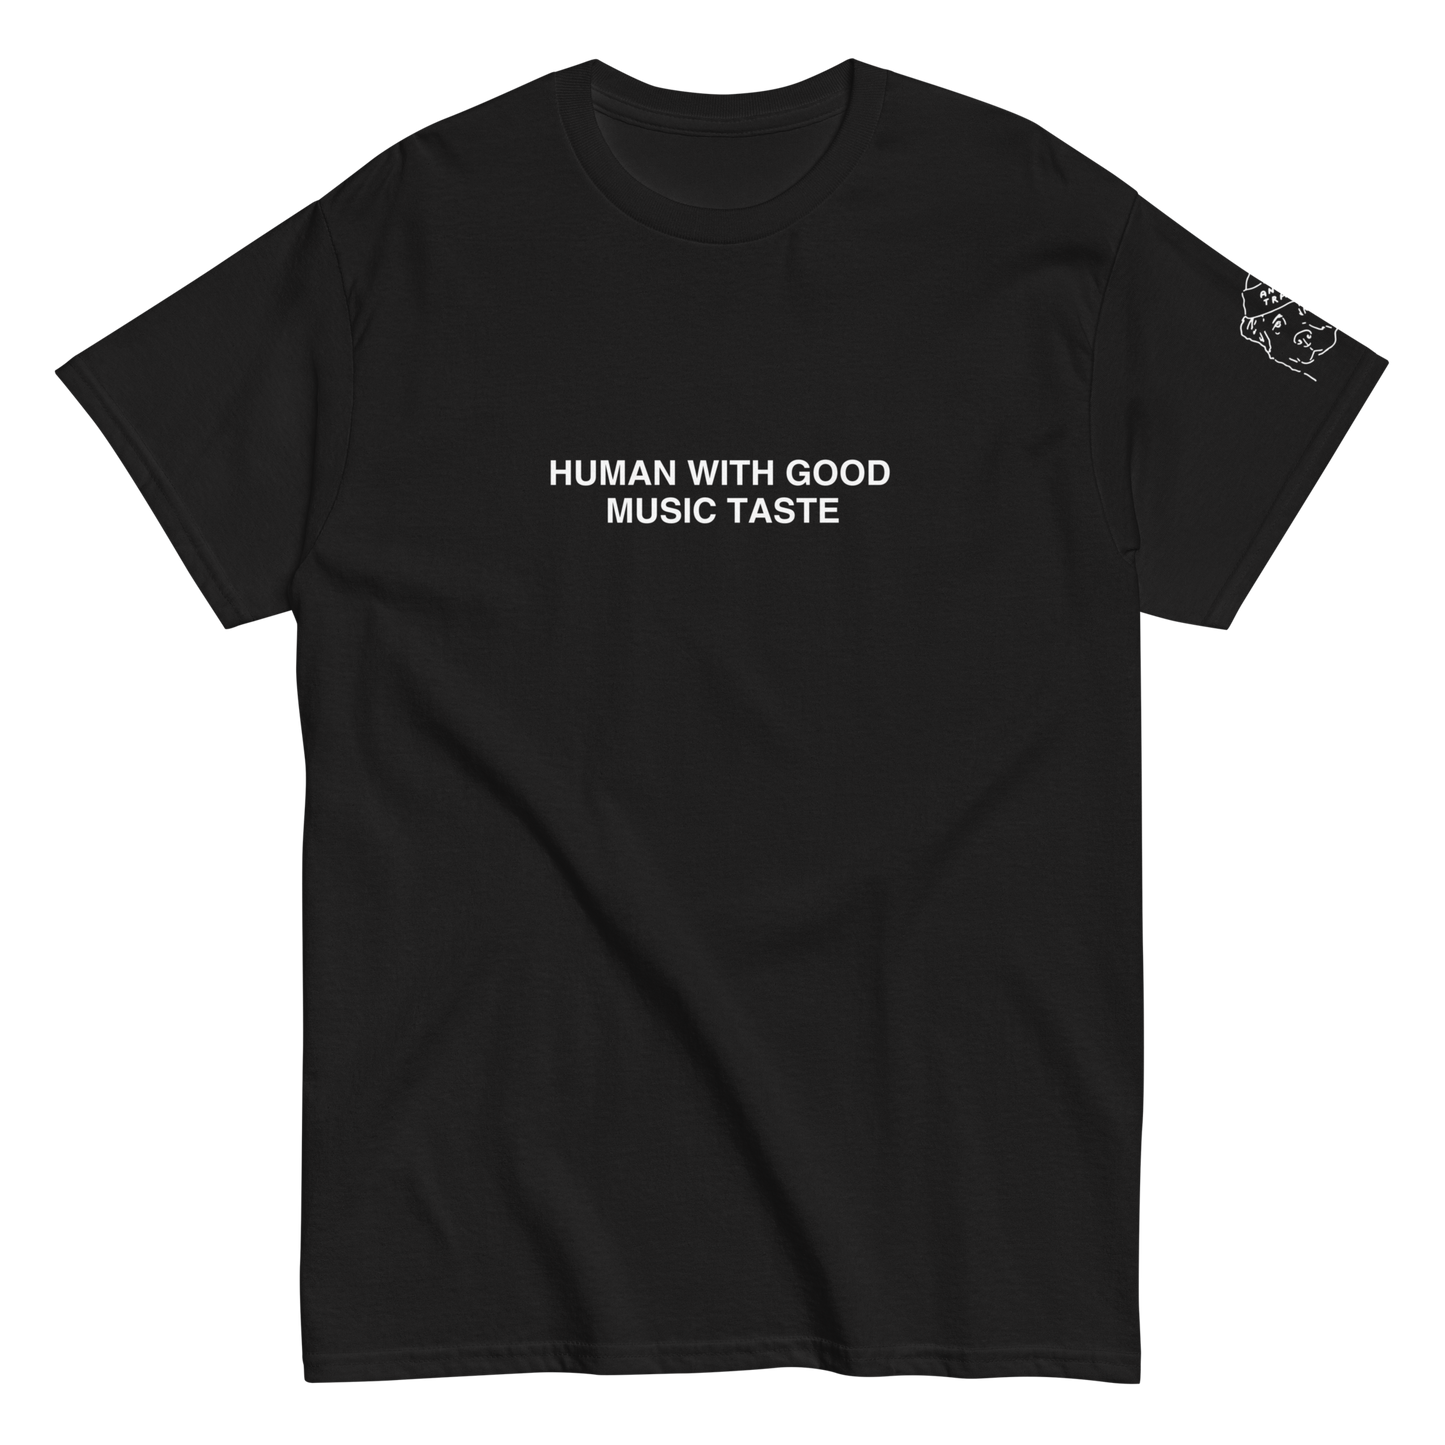 Human with Good Music Taste T-Shirt